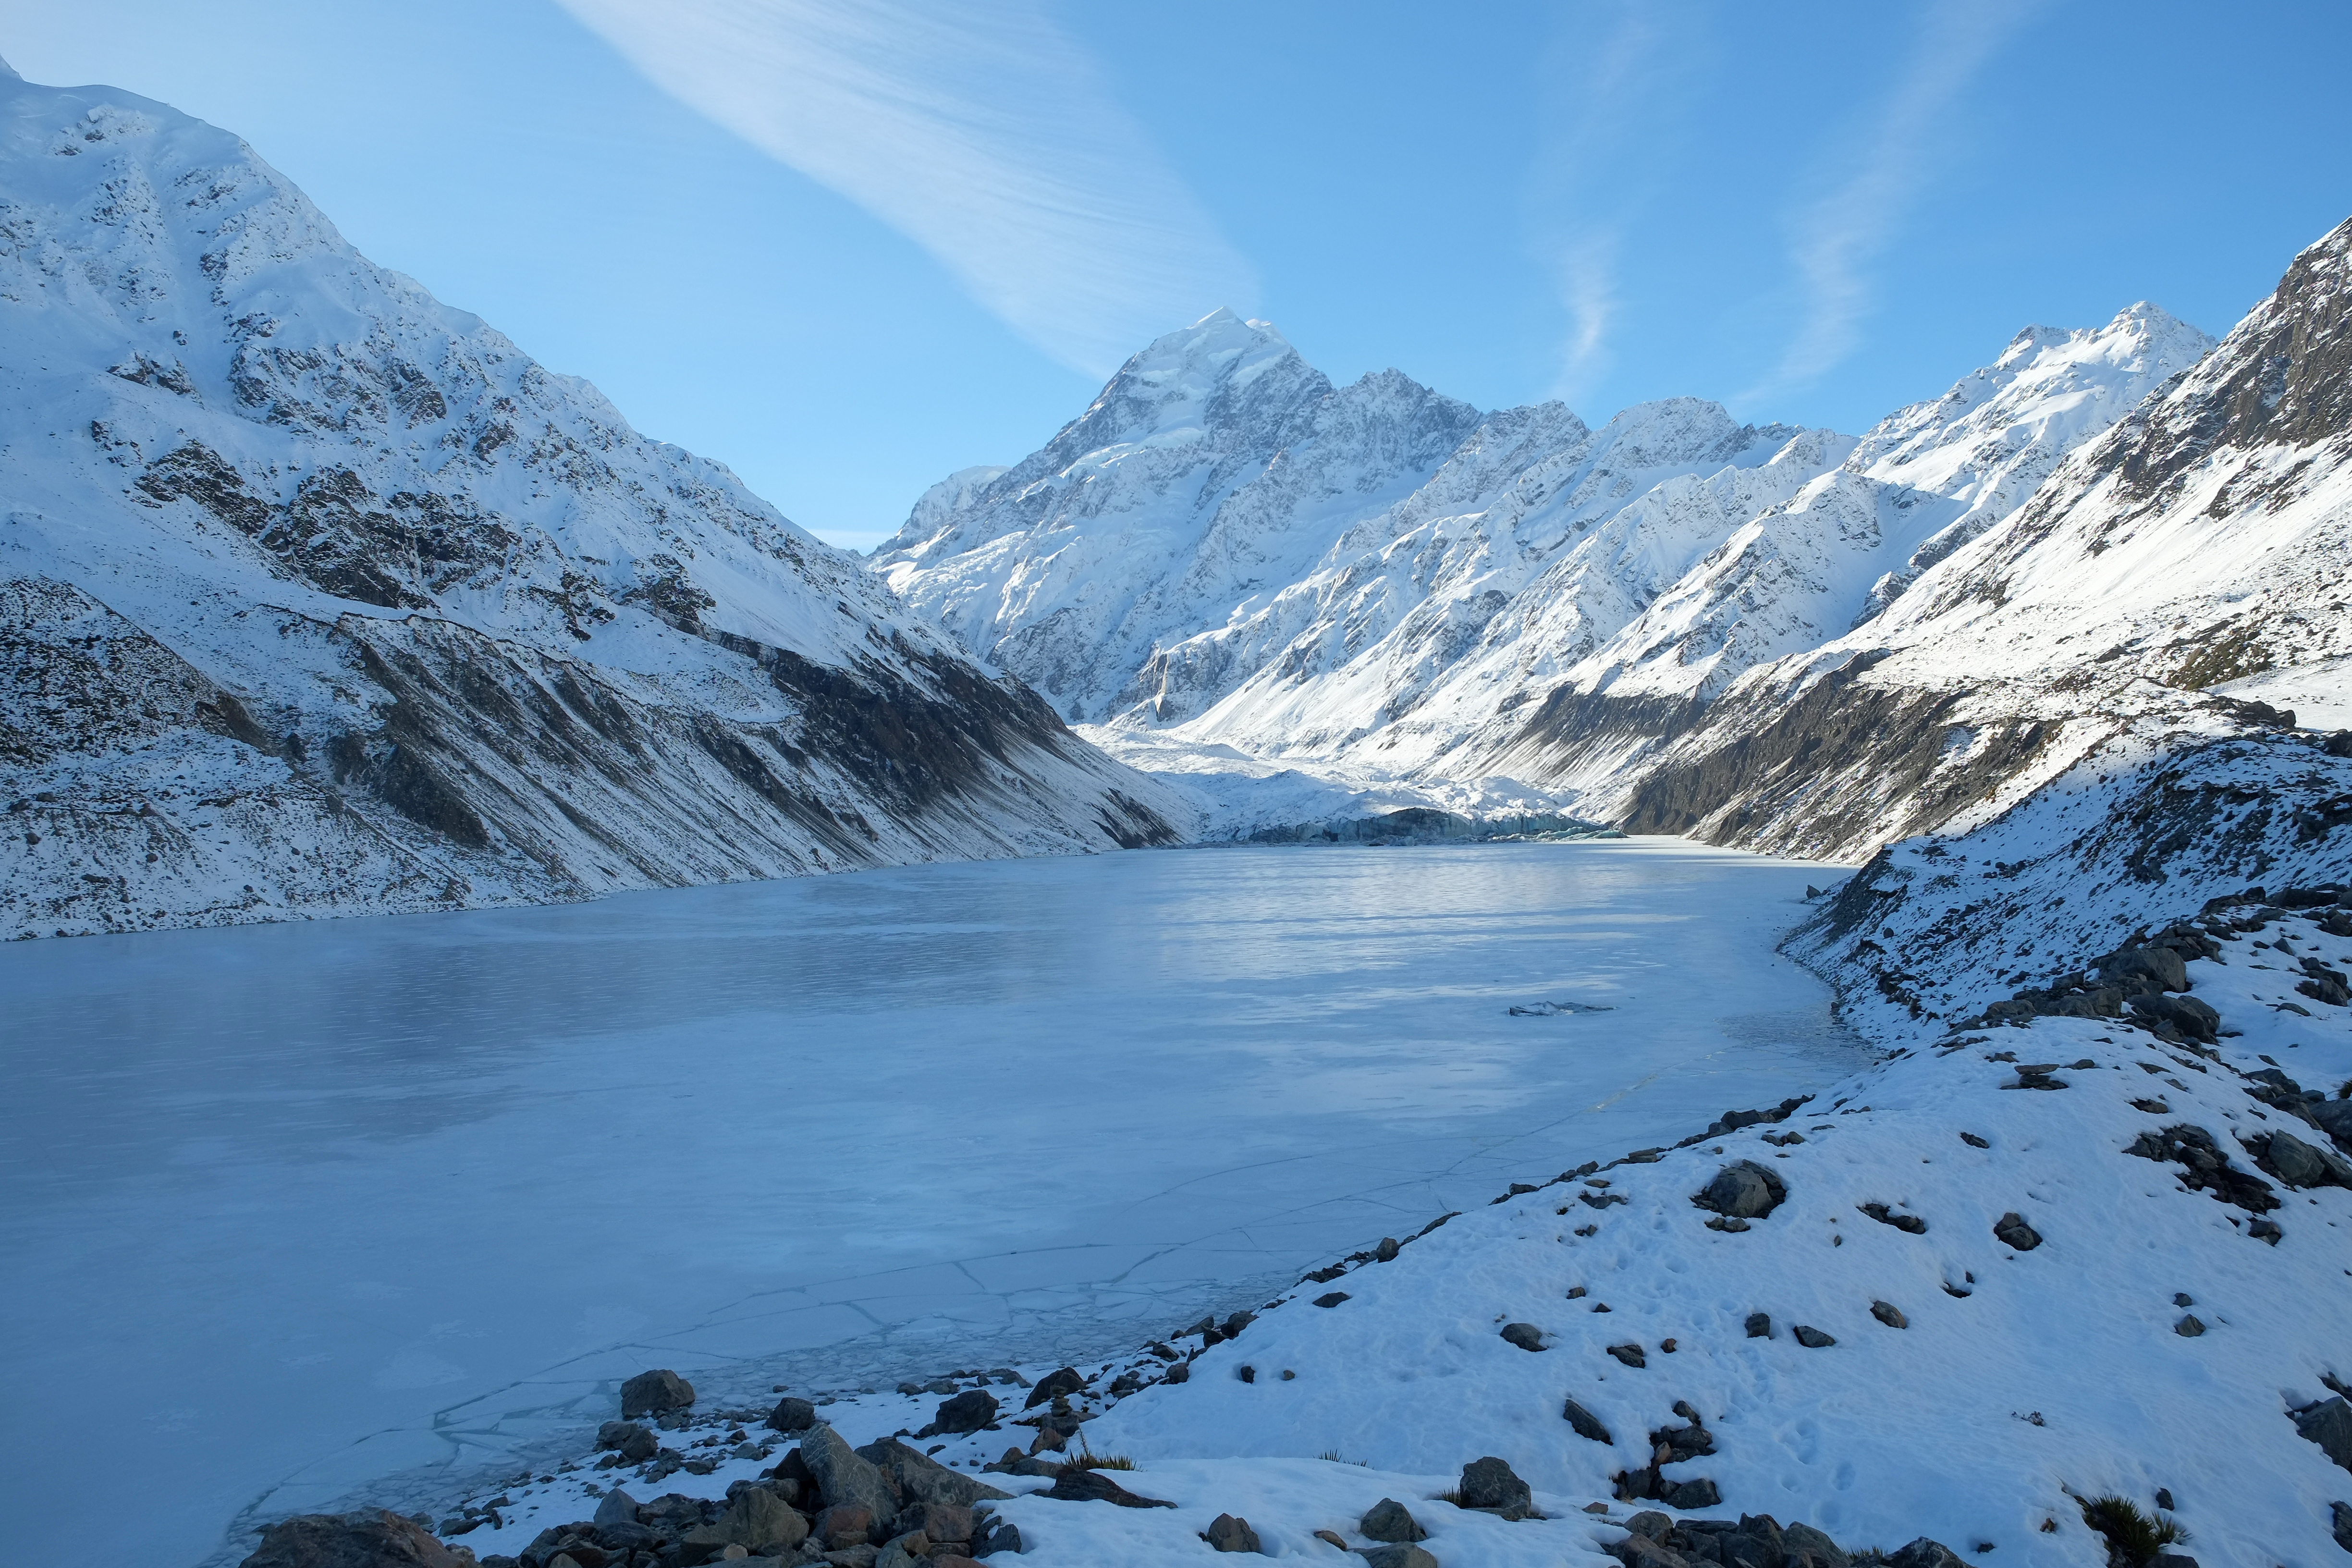 File:Frozen Hooker Glacier Lake and Hooker Glacier in winter with ...